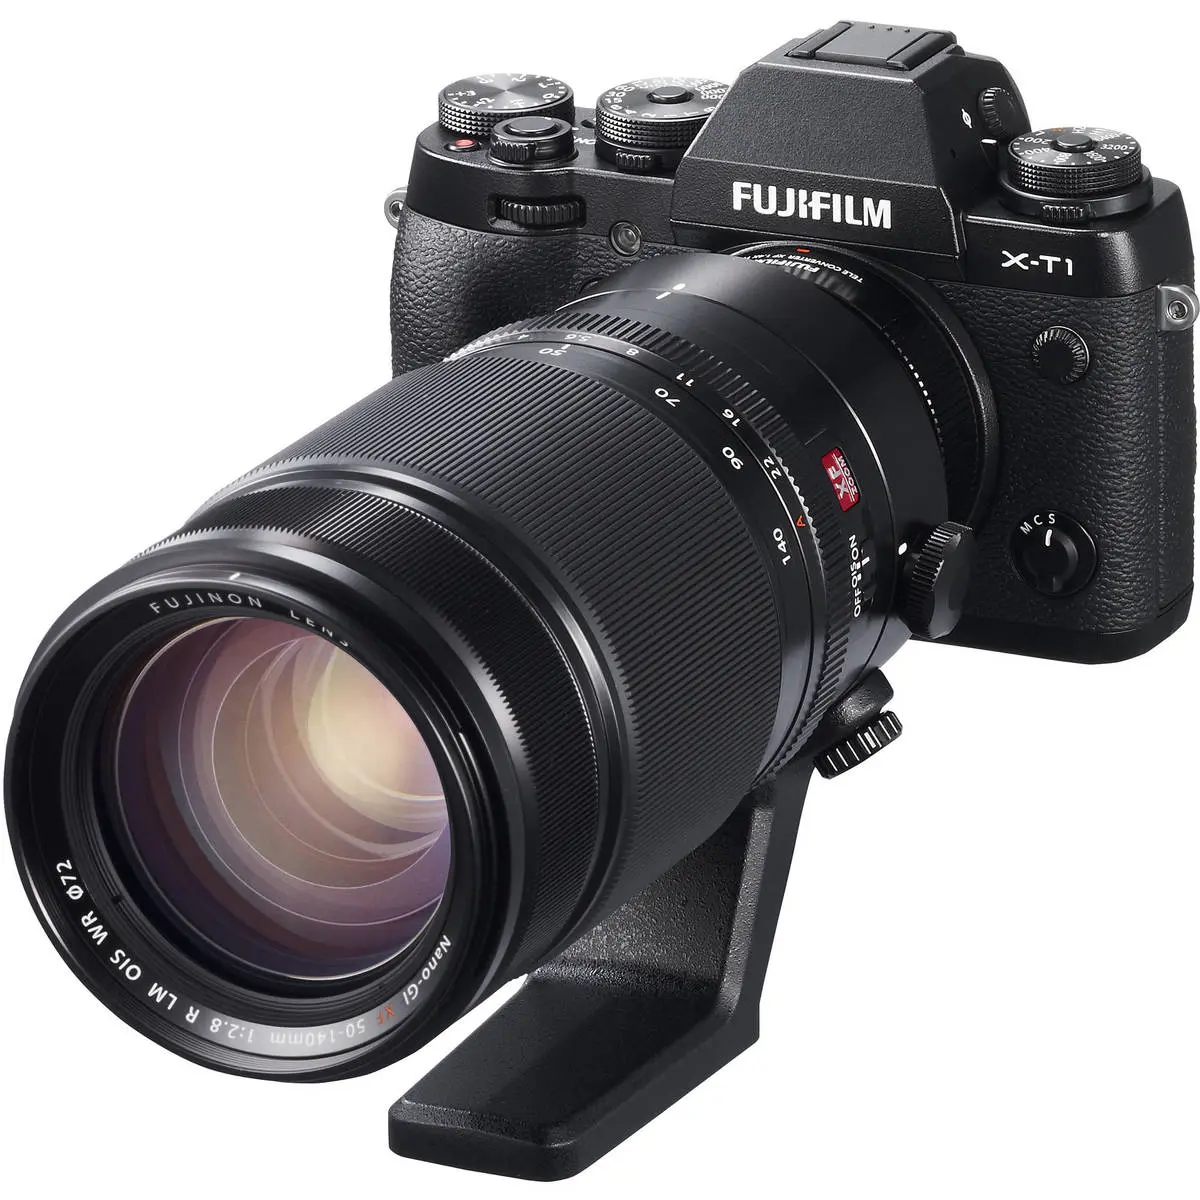 3. Fujifilm FUJINON XF 1.4X TC WR Teleconverter Lens